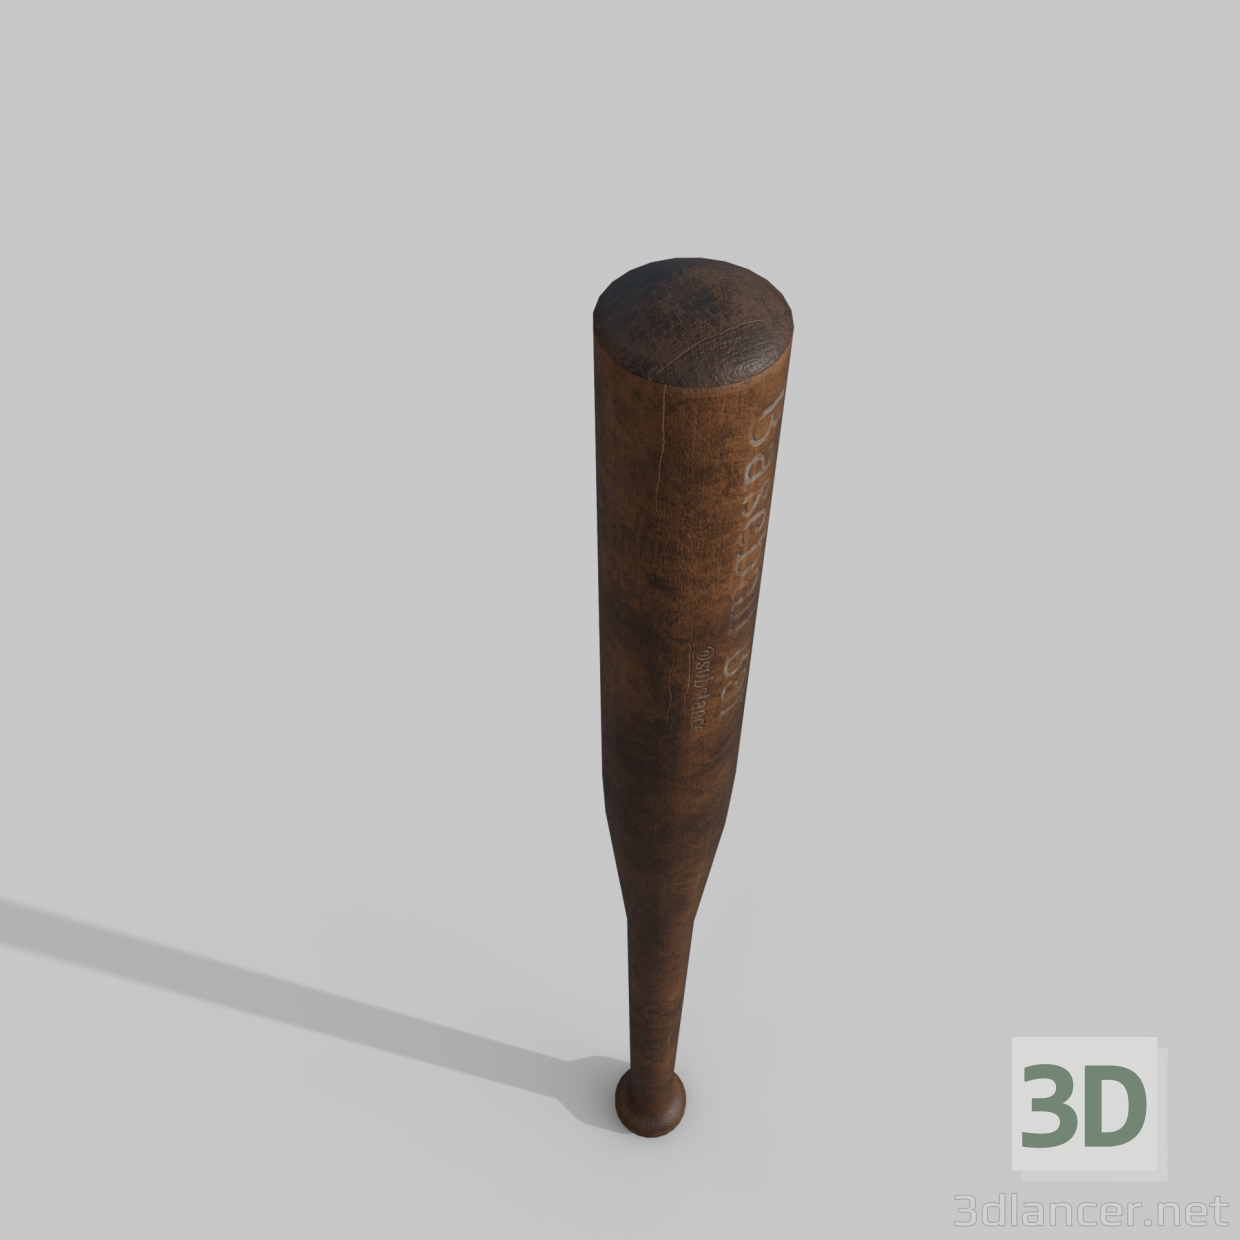 Baseballschläger 3D-Modell kaufen - Rendern